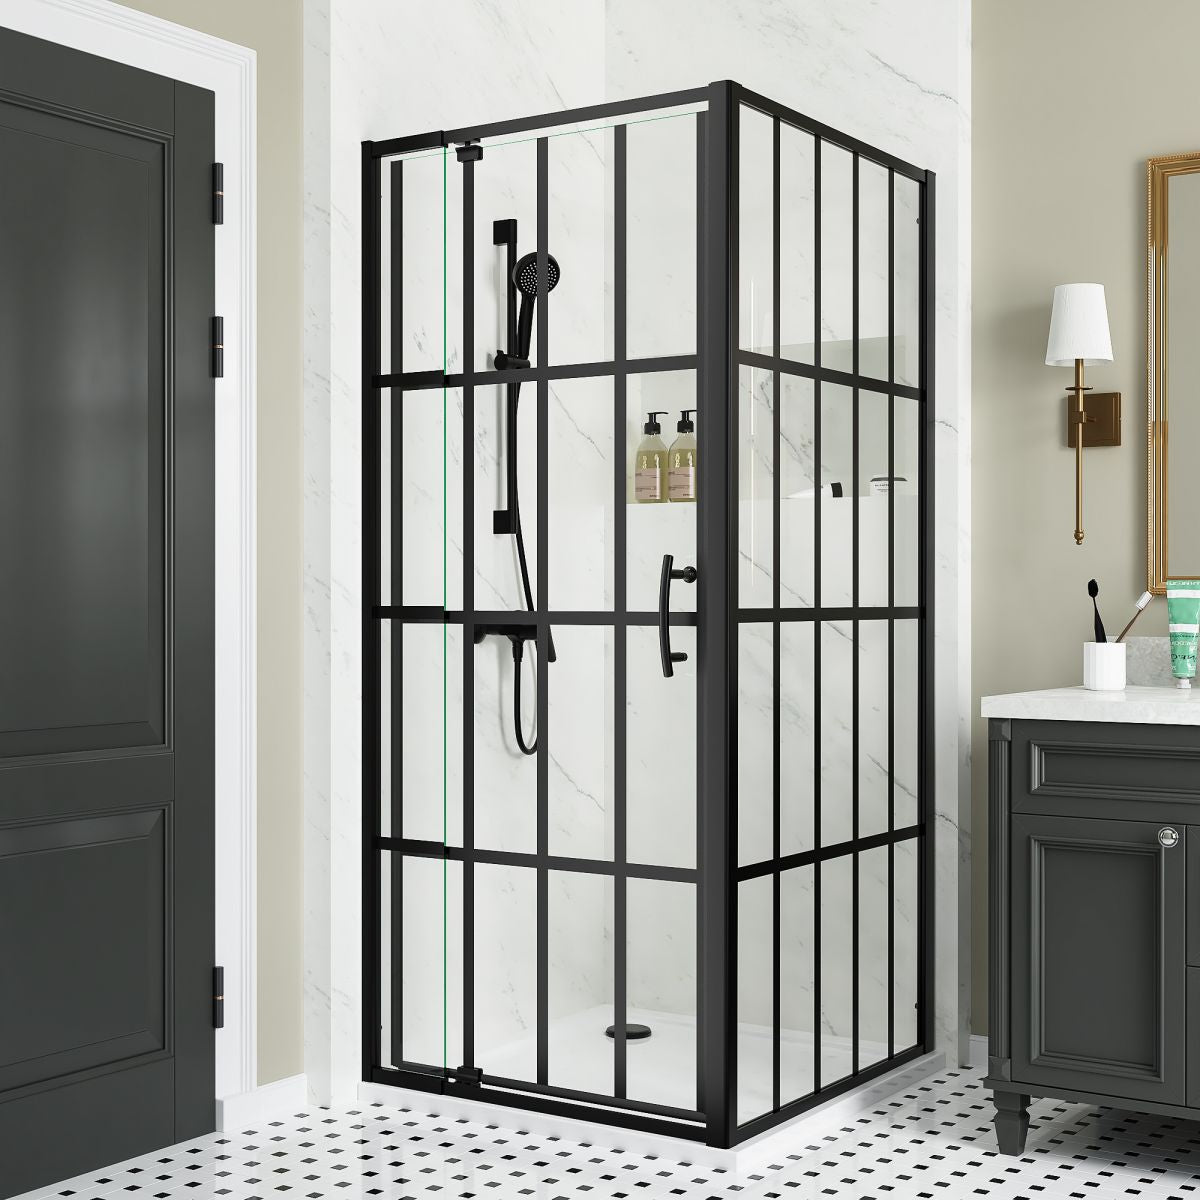 Haven Frameless Shower Door 36 in. W x 72 in. H,Corner Shower Enclosure,6mm Clear Glass,Pivot Shower Doors,Brushed Nickel,Not Shower Base